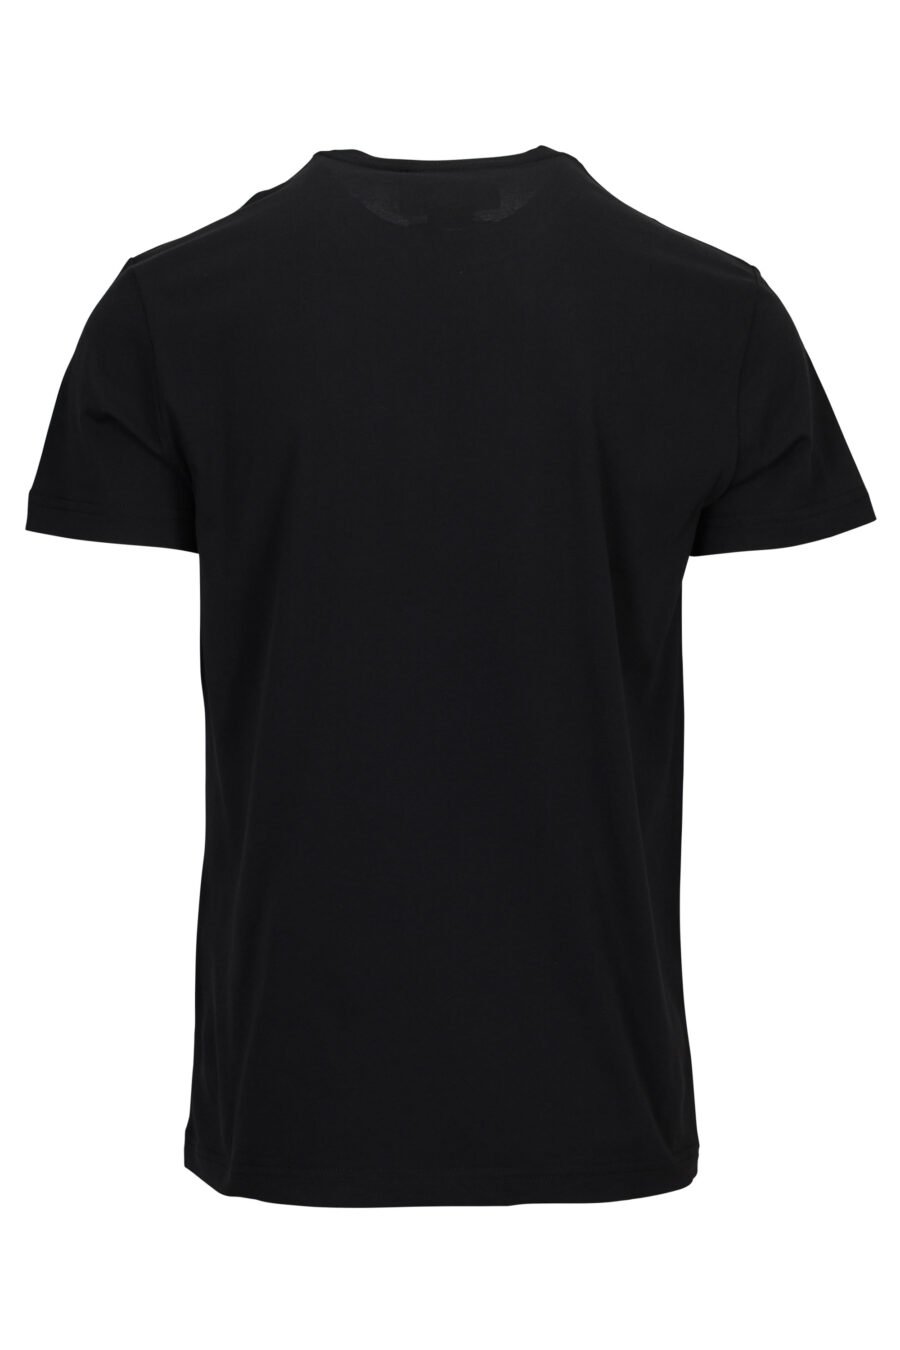 T-shirt noir avec maxilogo aquarelle baroque - 8052019589535 1